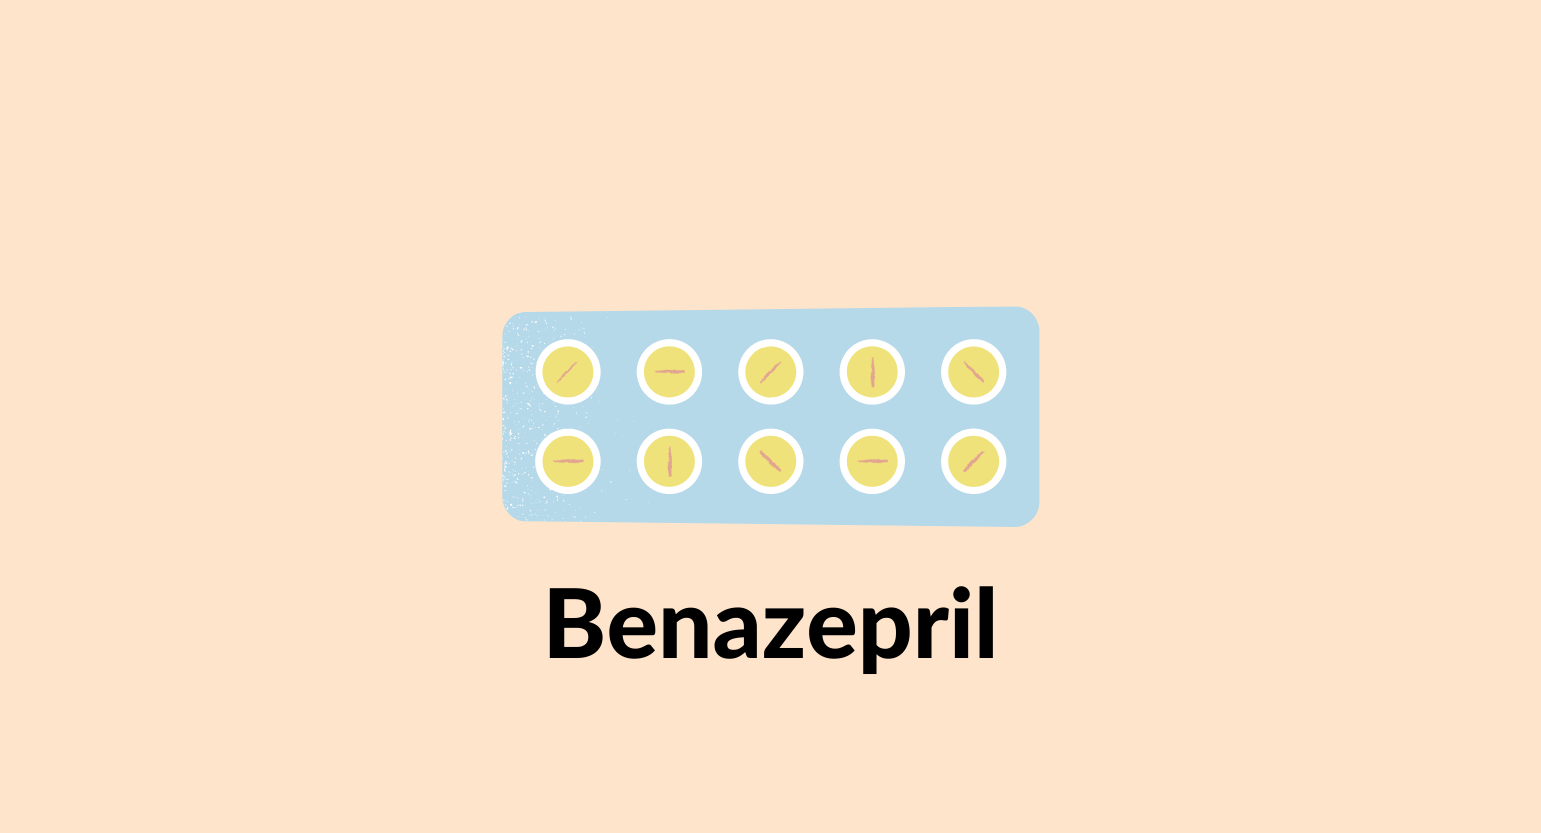 Benazepril illustration